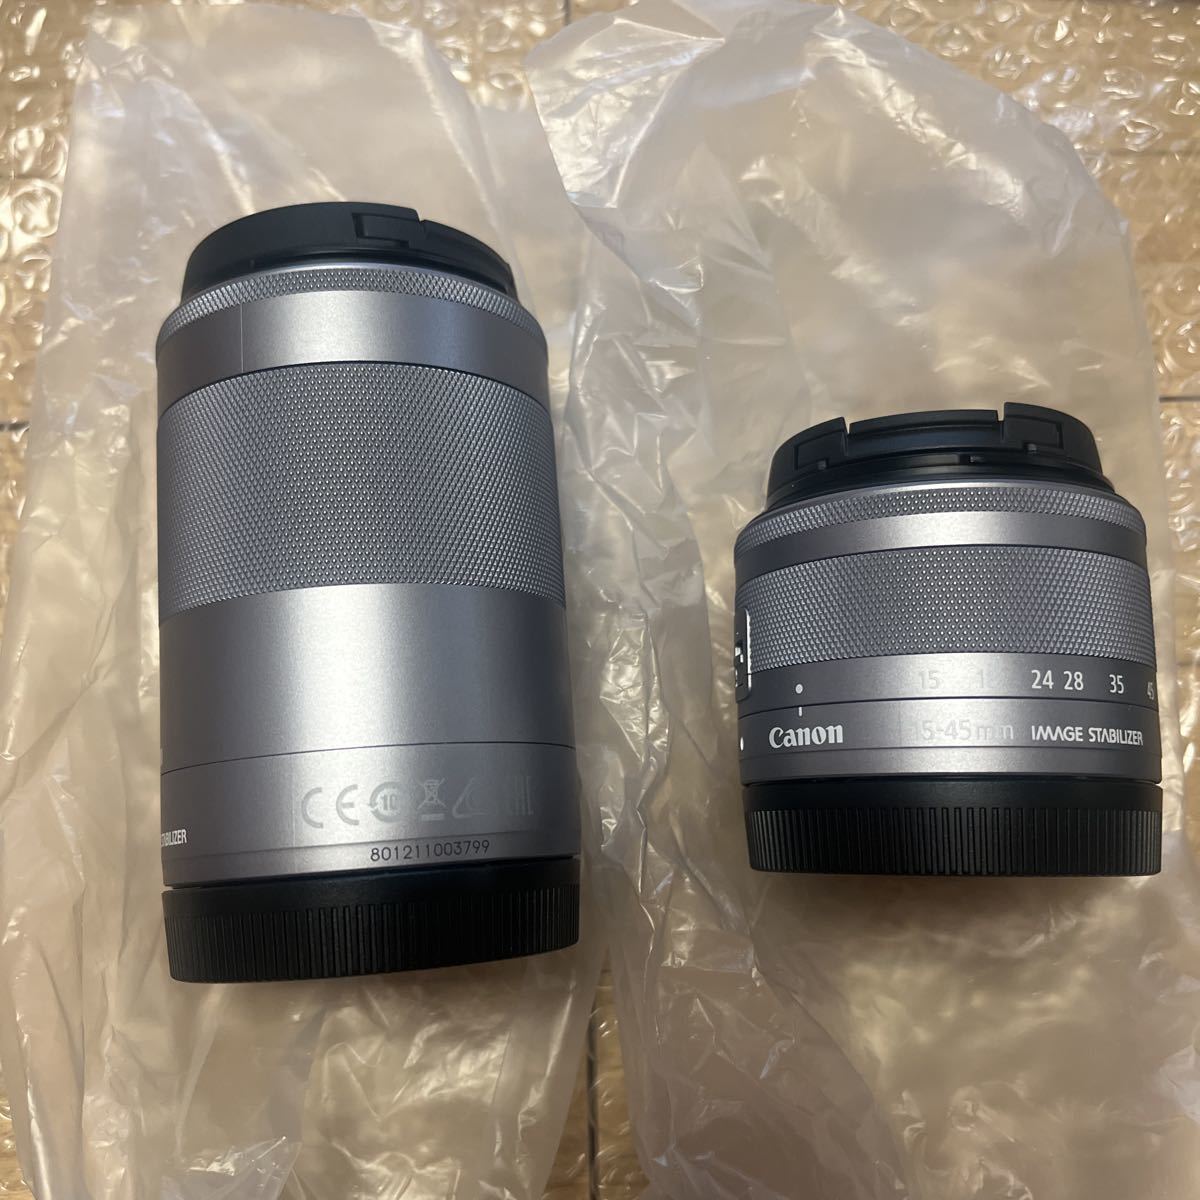  exhibition goods Canon Canon mirrorless single-lens camera EOS M200 double zoom kit ( white )